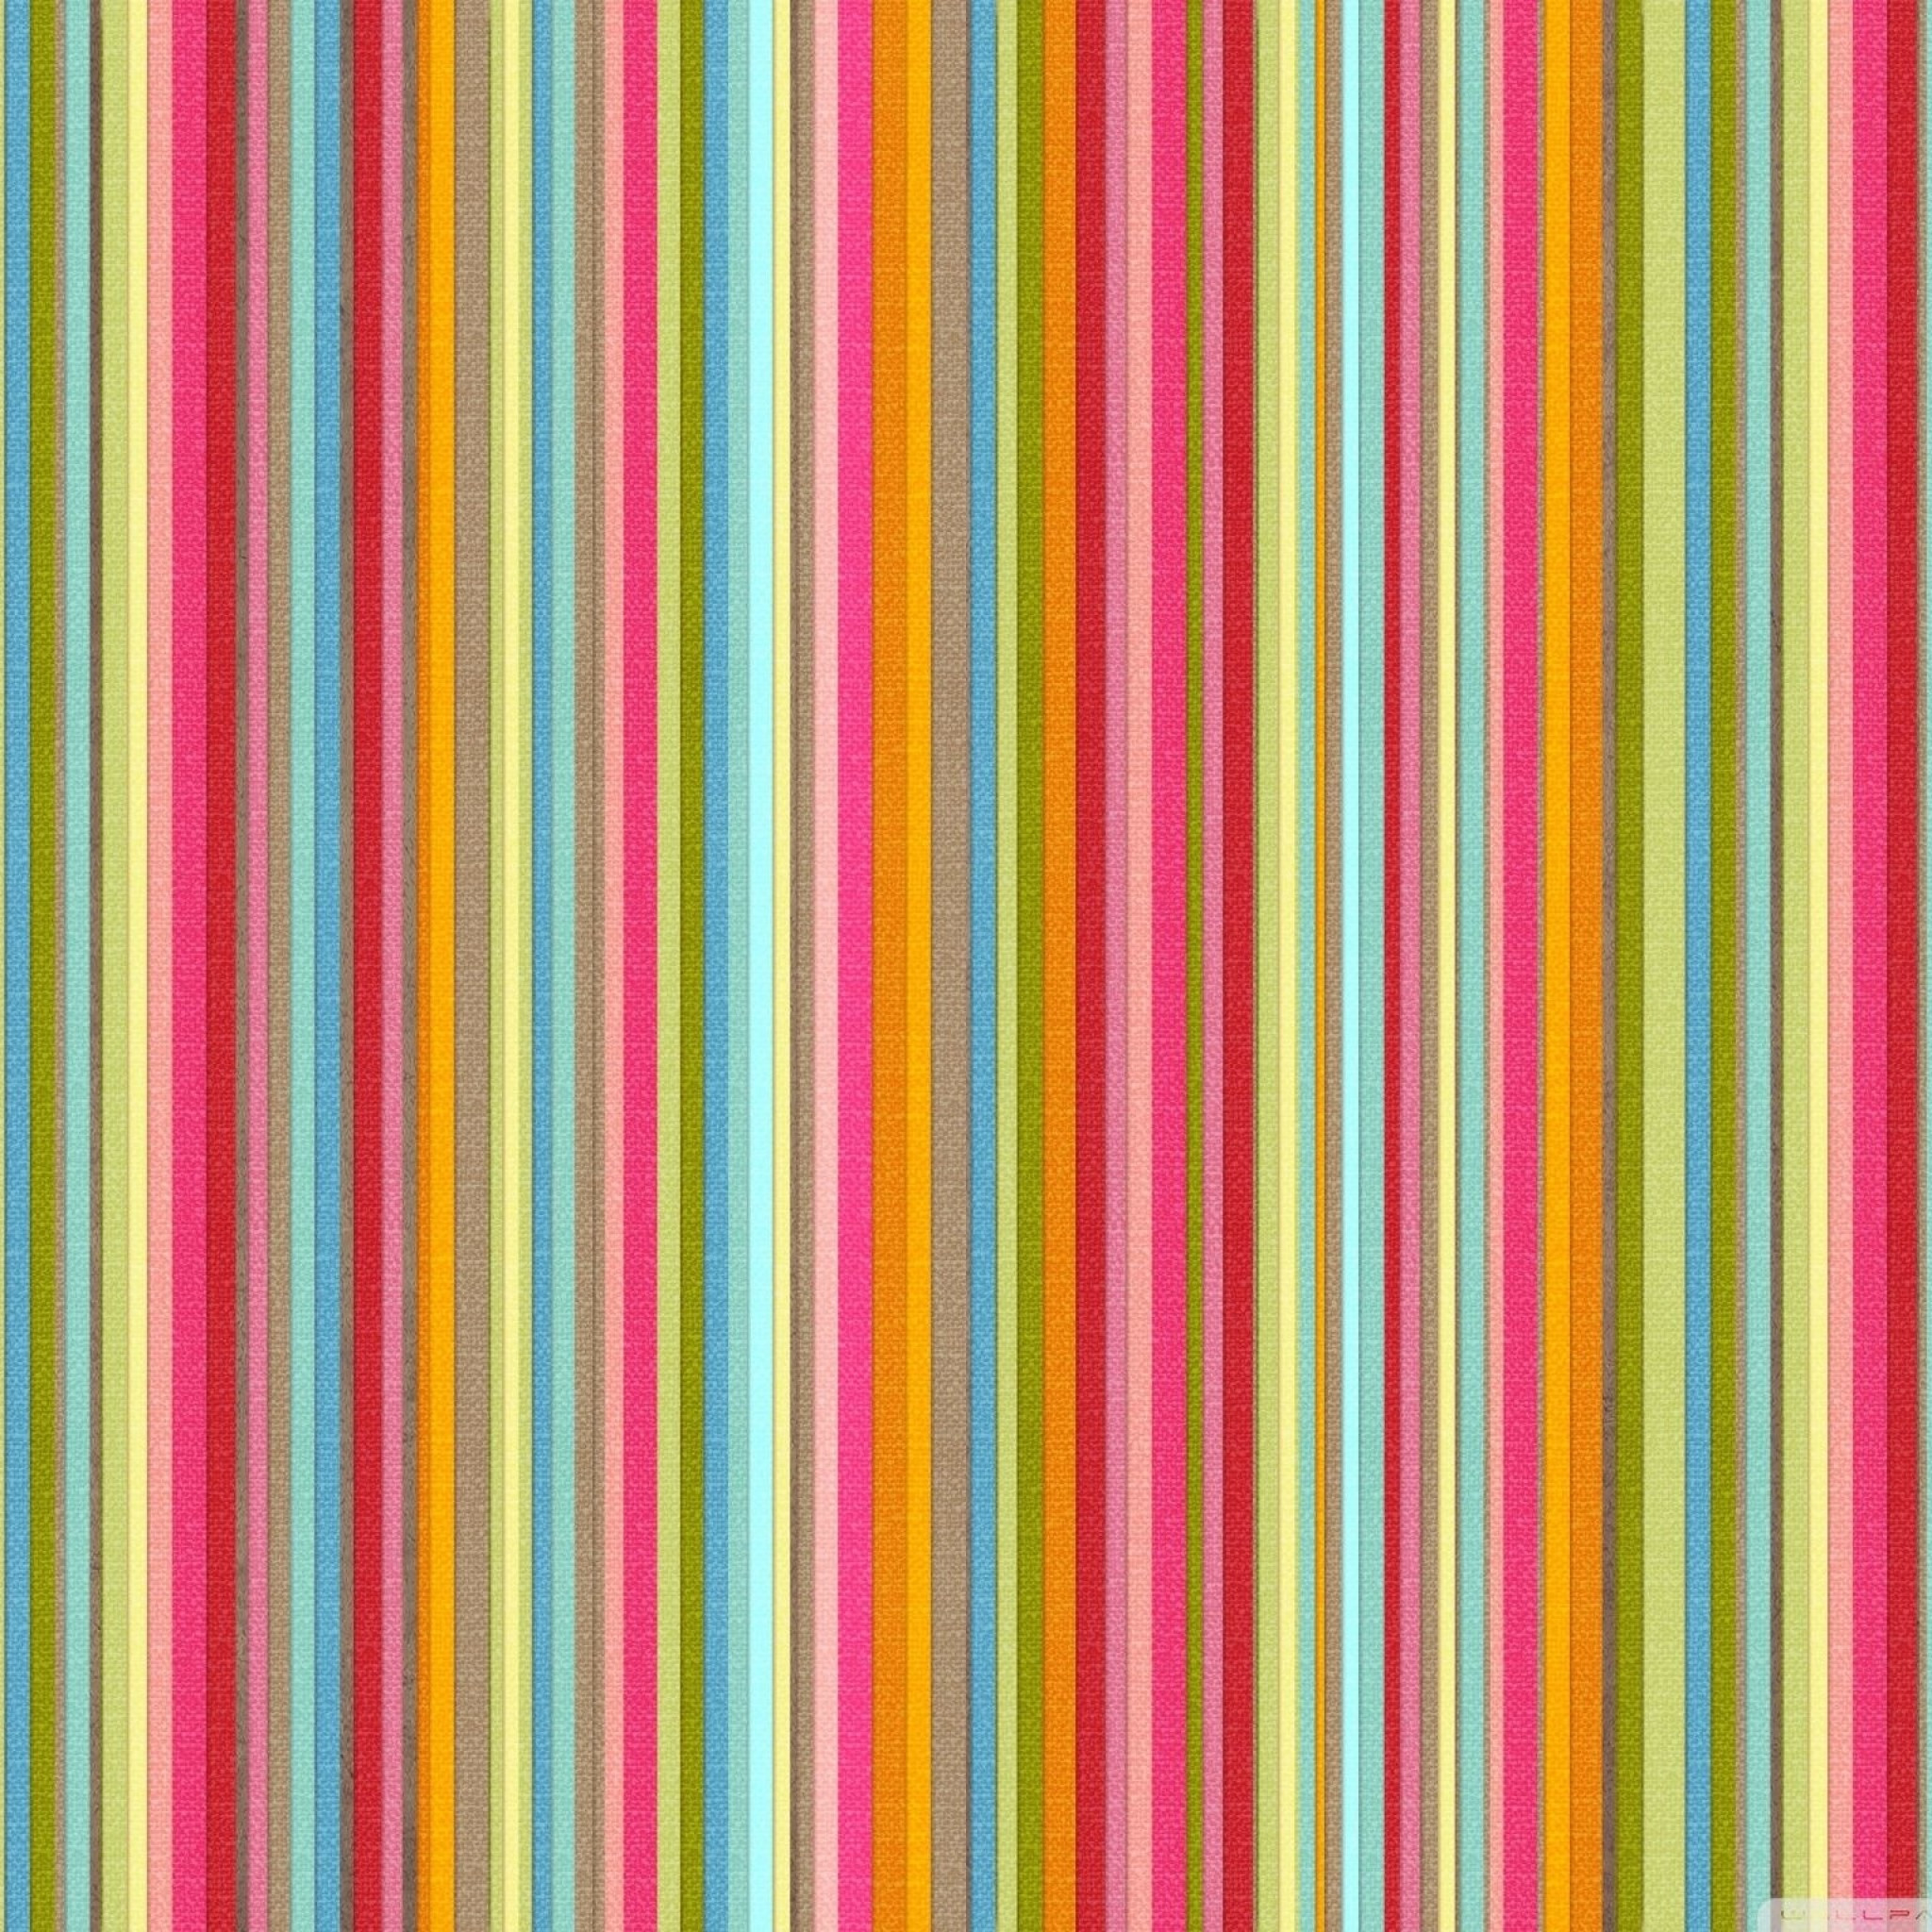 2048x2048 Lineas verticales coloridas